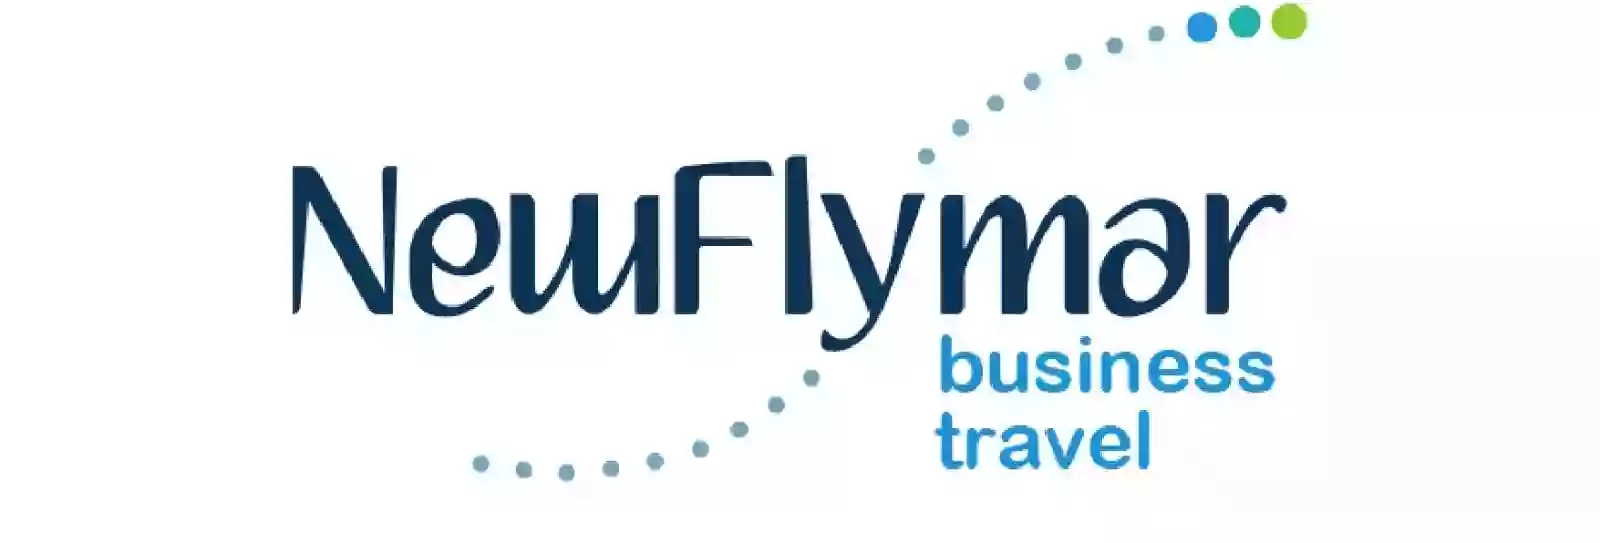 New Flymar Srl - Travel Management Company